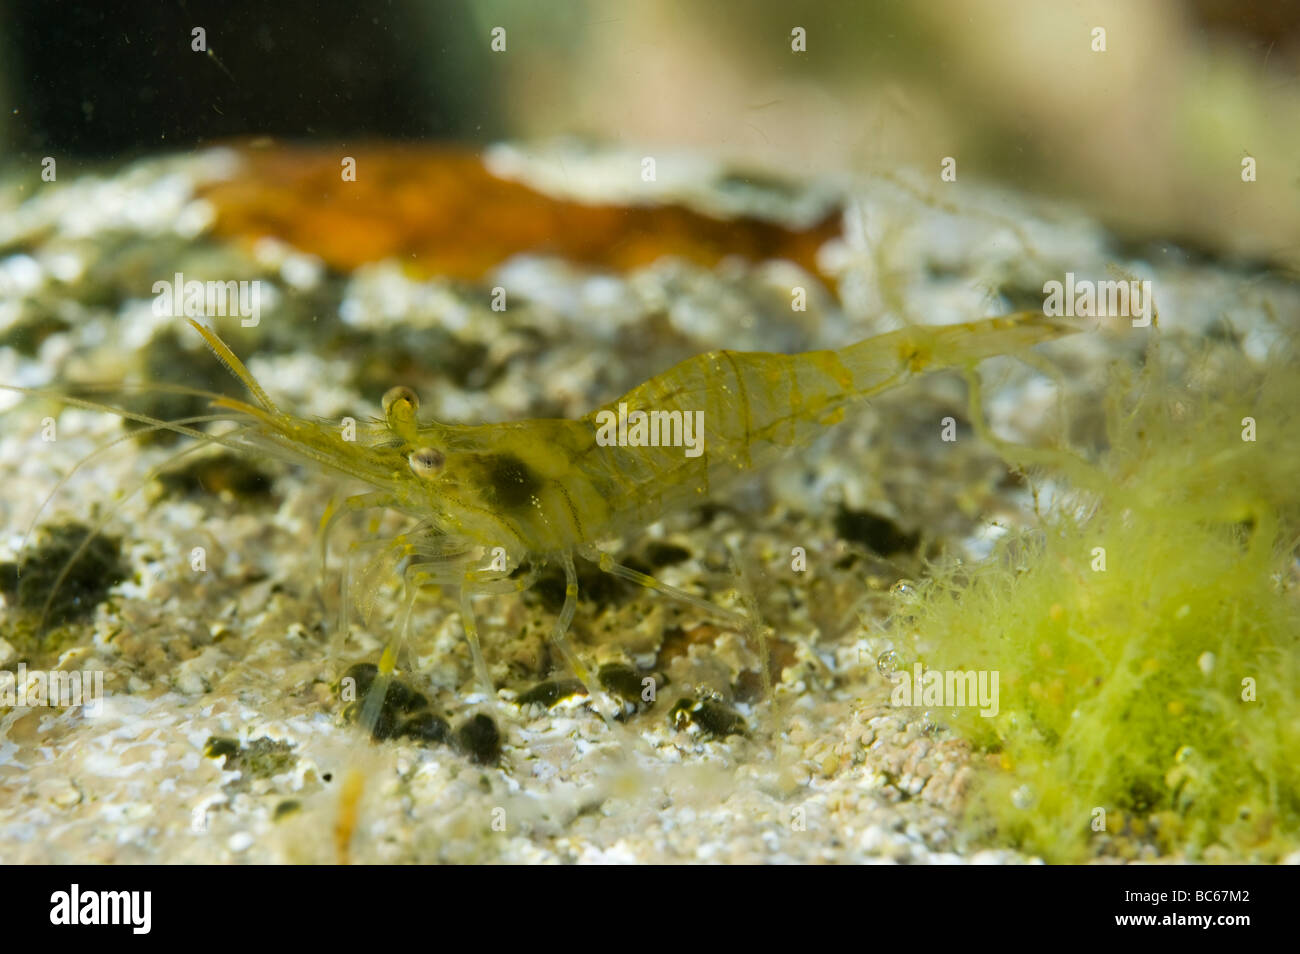 Rock Shrimp on rock amongs green alges, Sweden Stock Photo